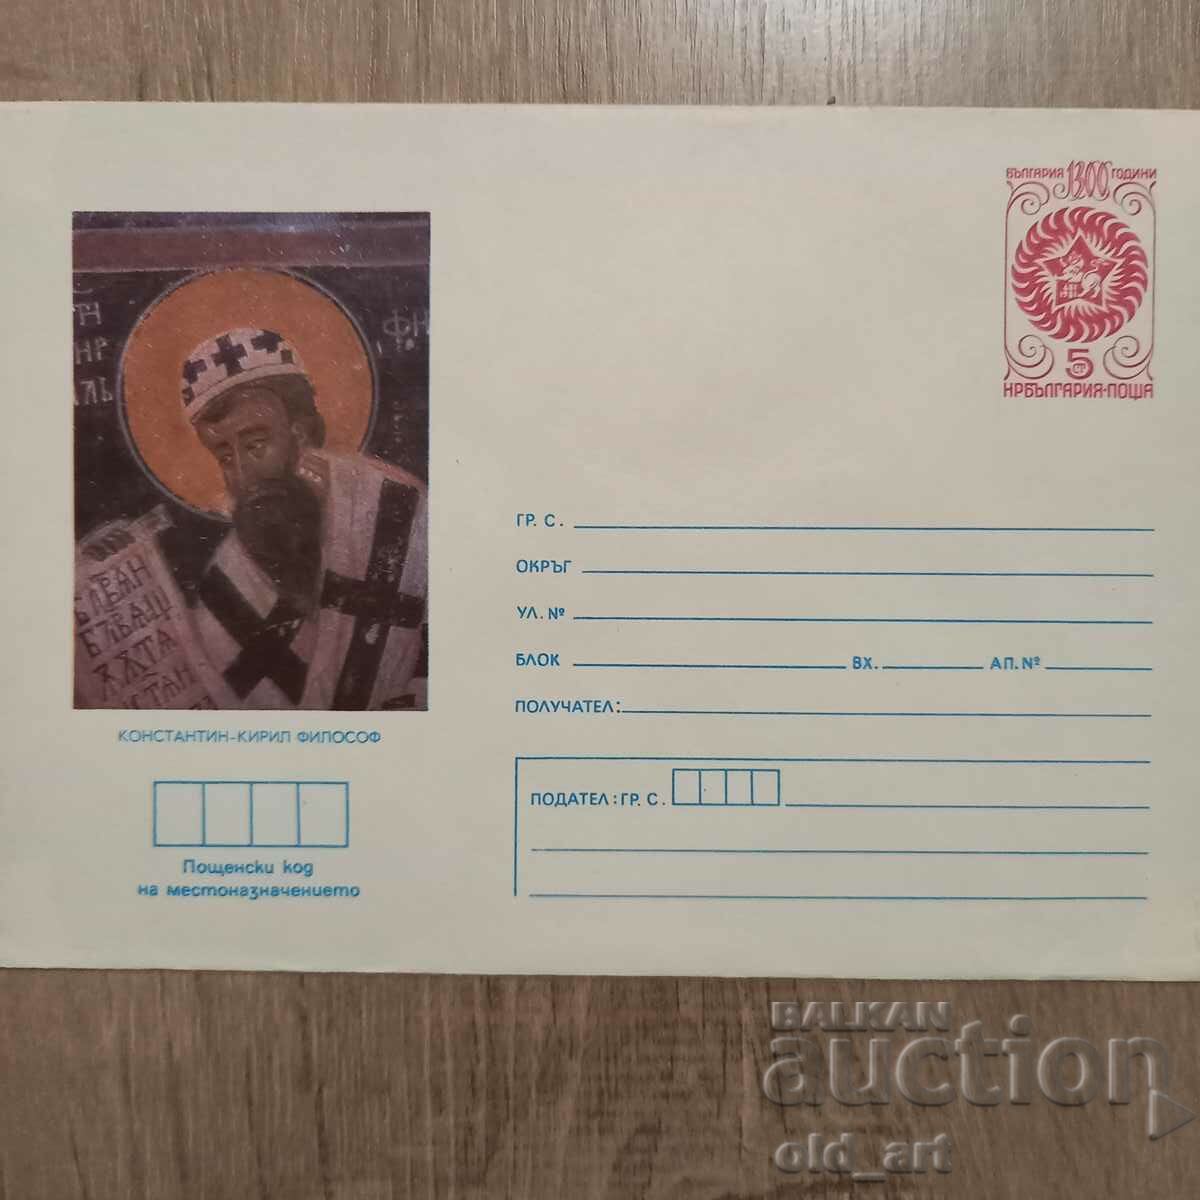 Postal envelope - Konstantin Kiril the Philosopher